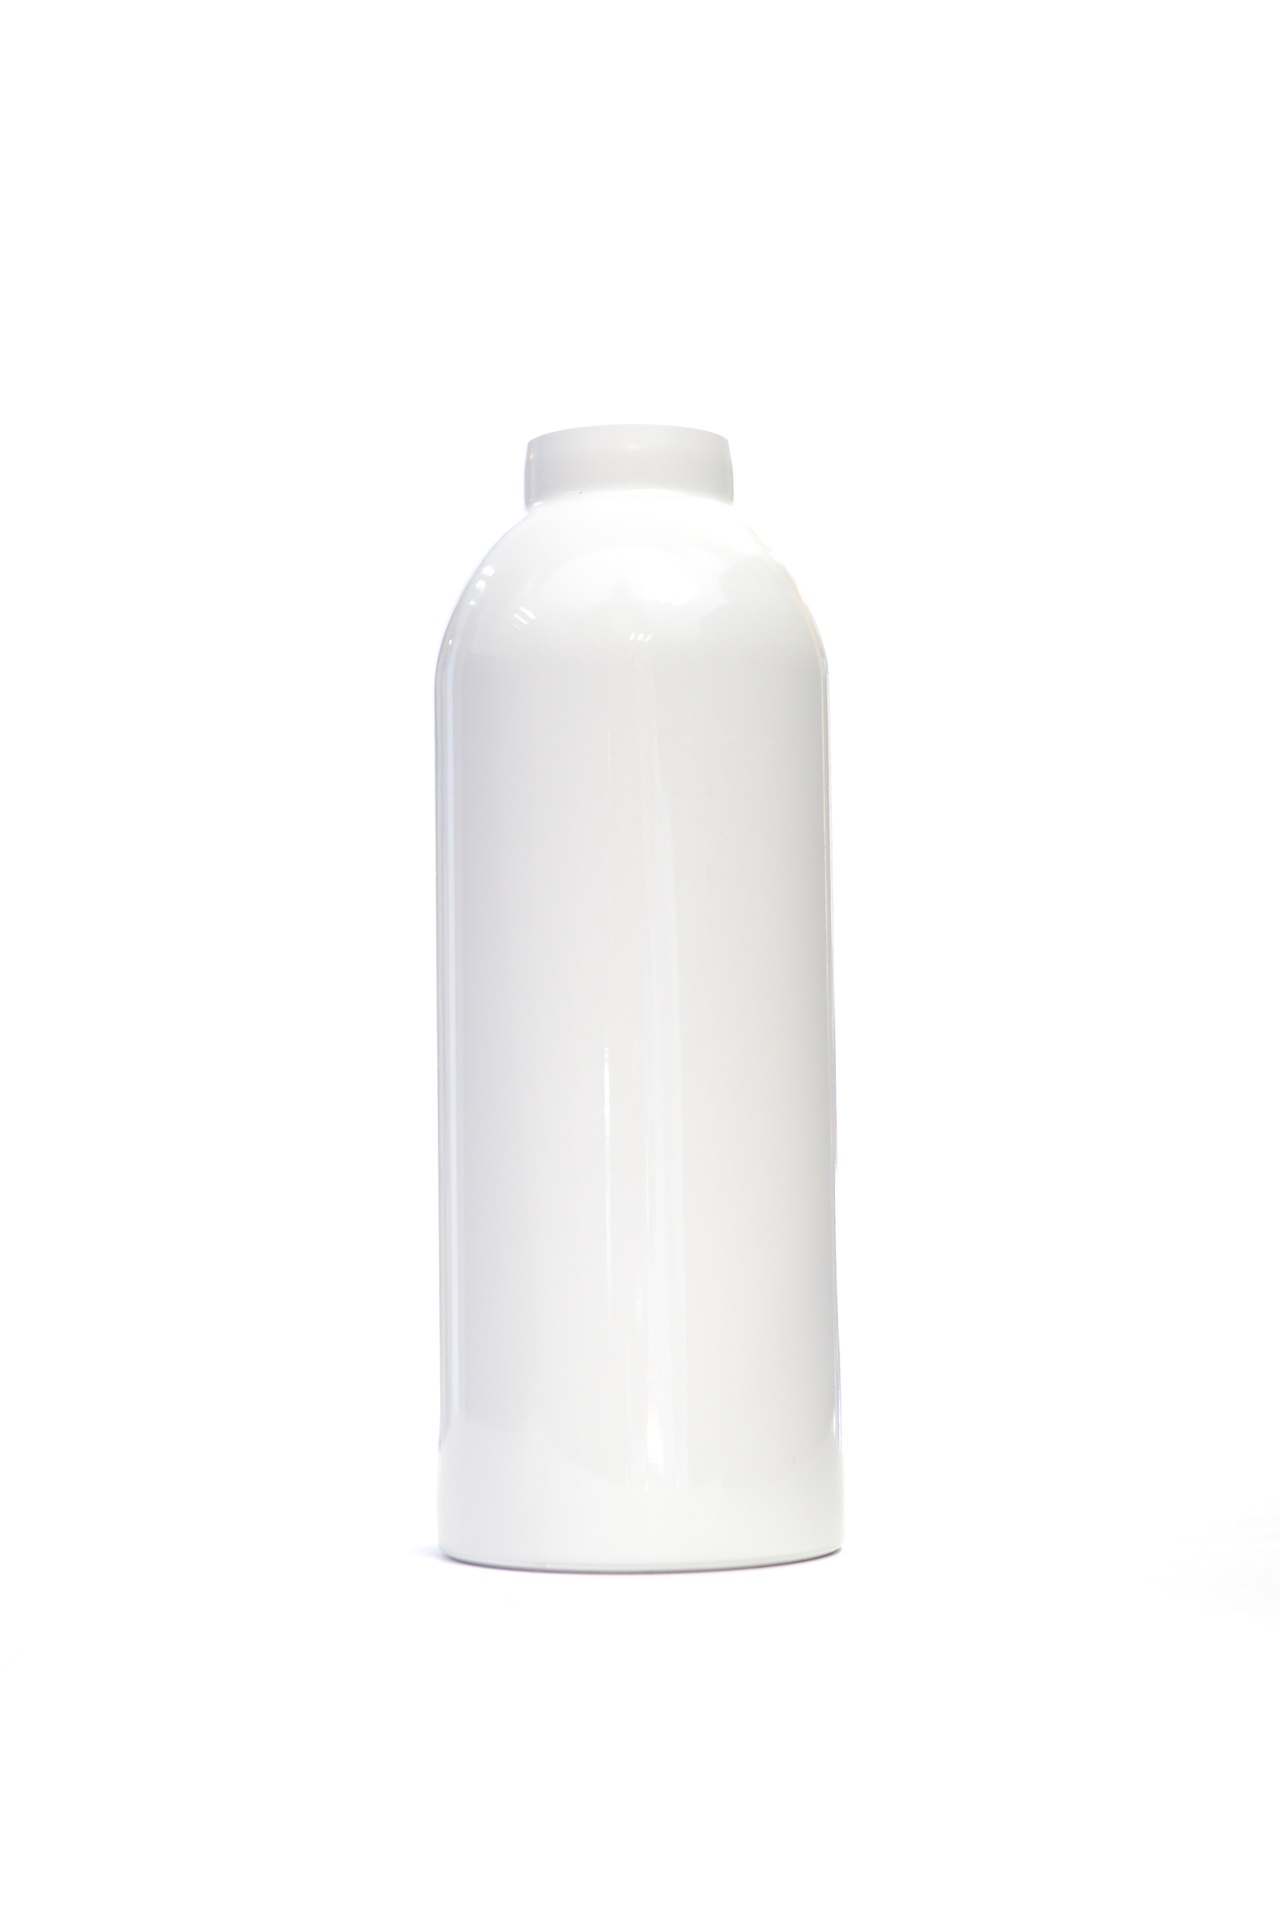 75g Brushed Glossy Aluminium Powder Bottle (45x126mm), 22mm Neck